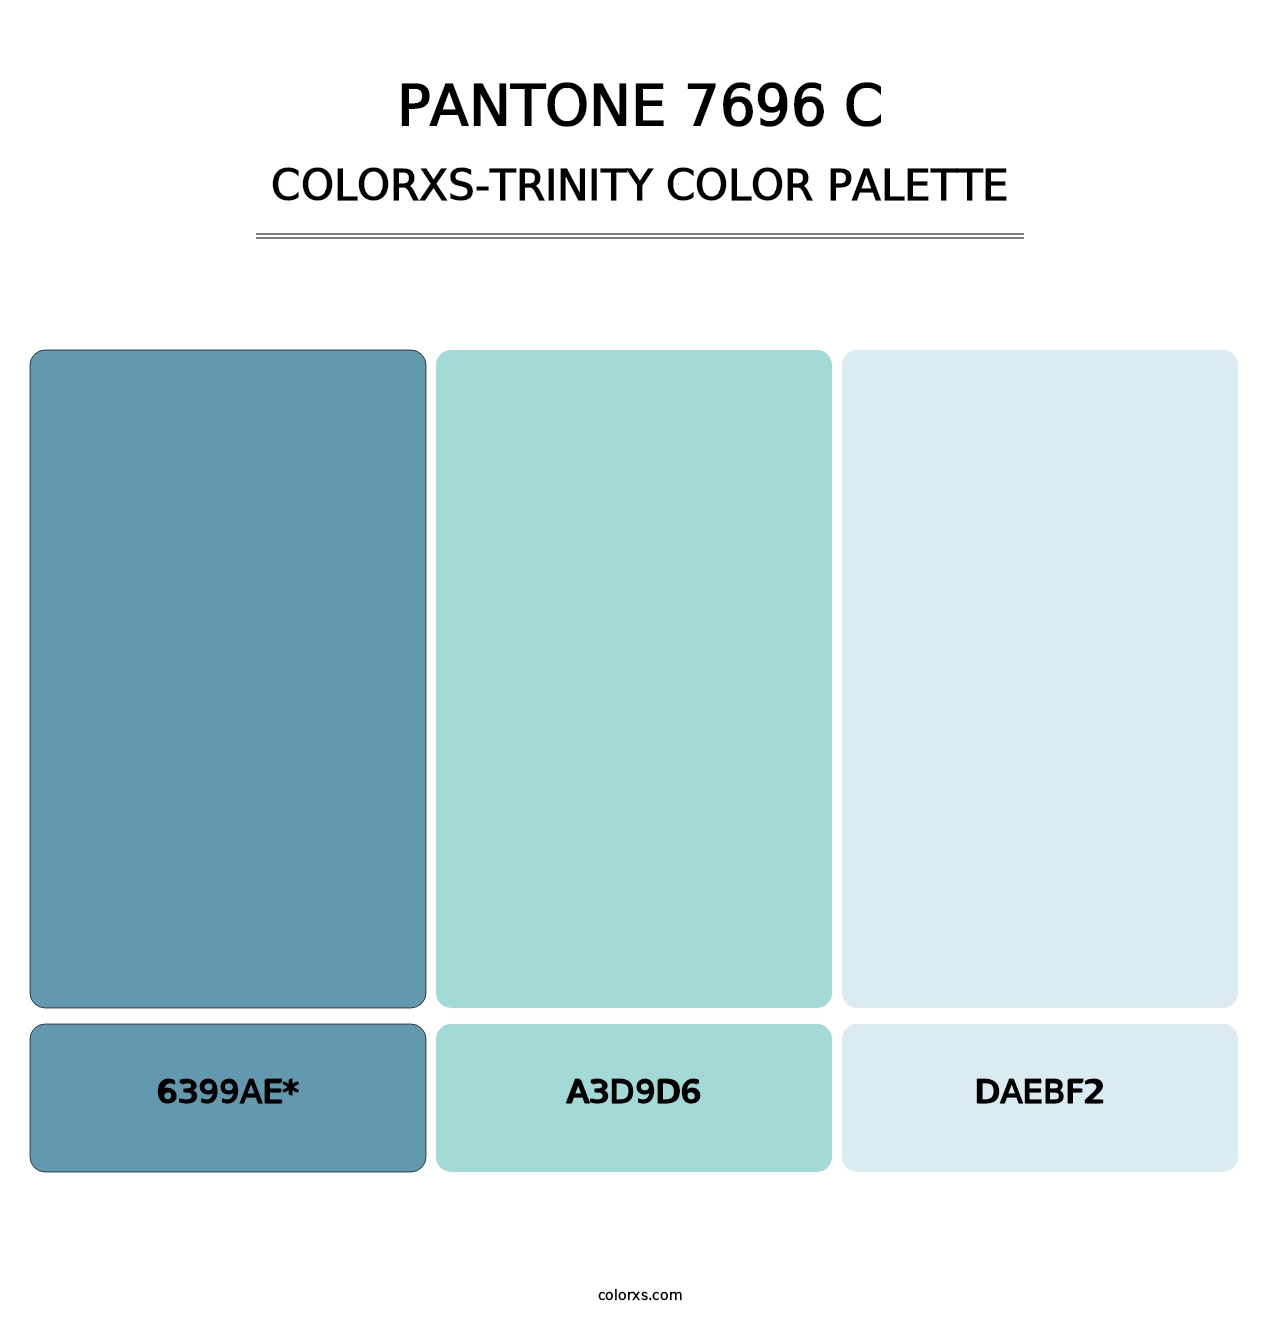 PANTONE 7696 C - Colorxs Trinity Palette